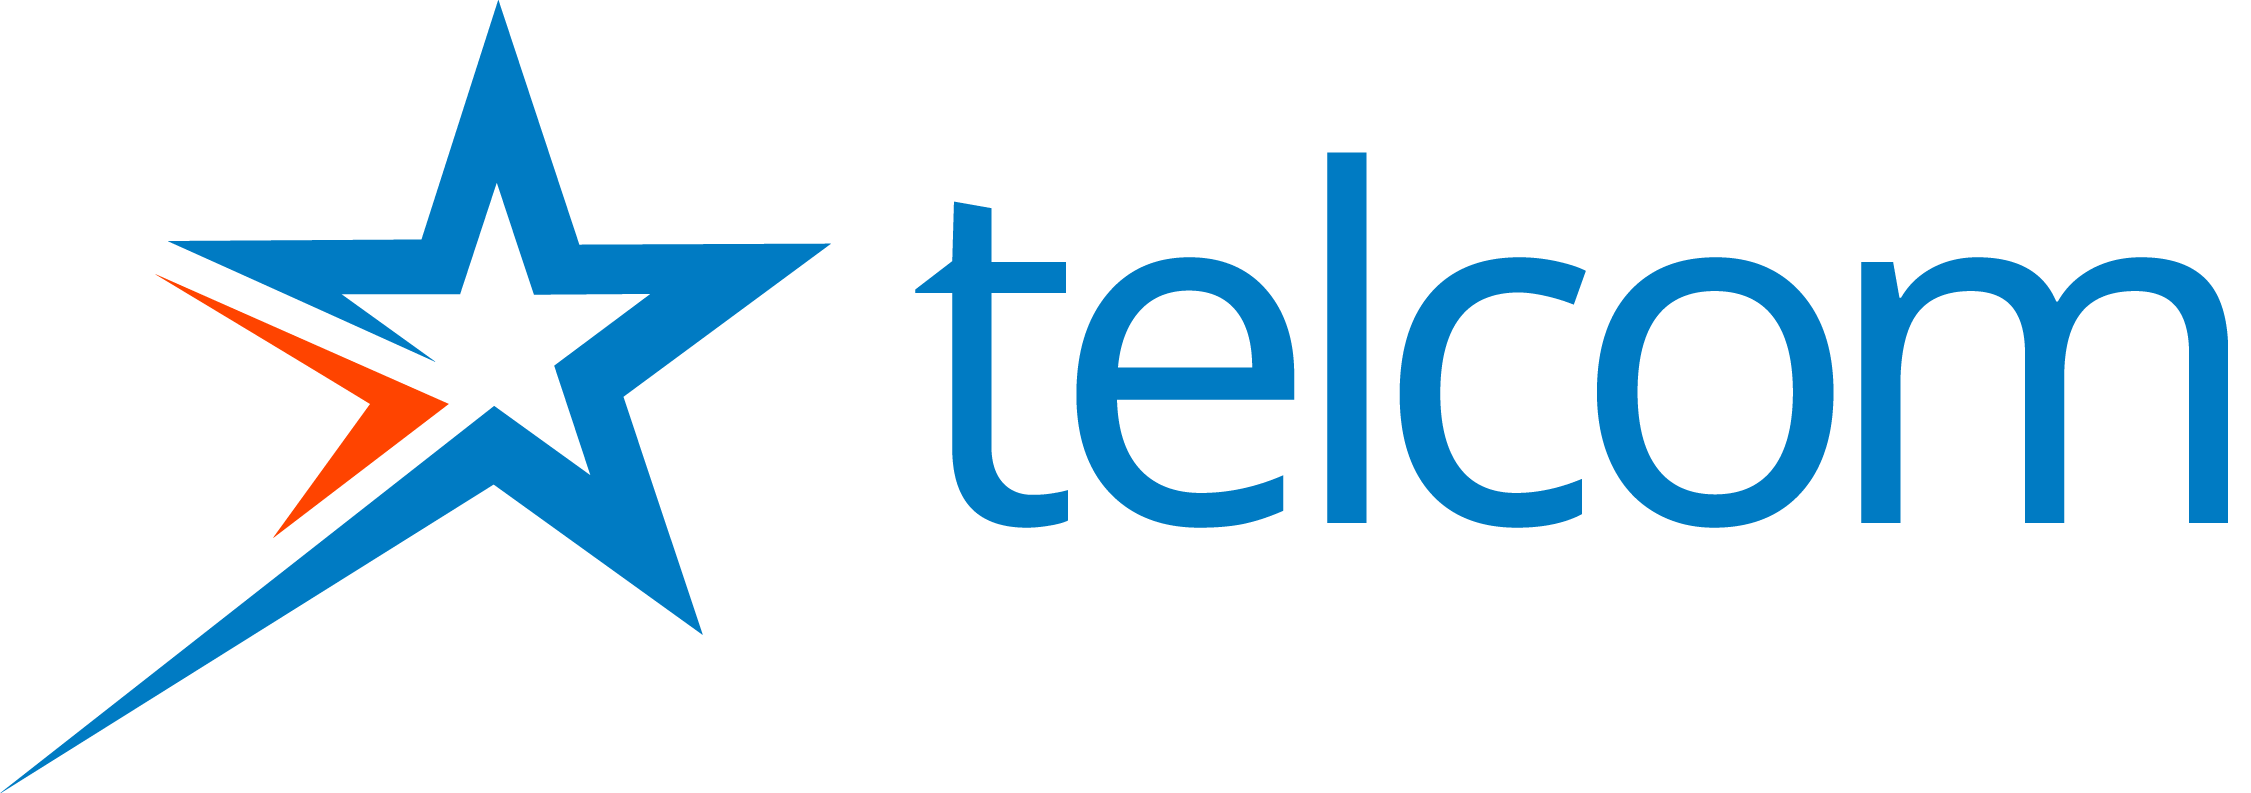 Individual Logo - Telcom logo downloads & guidelines - Telcom